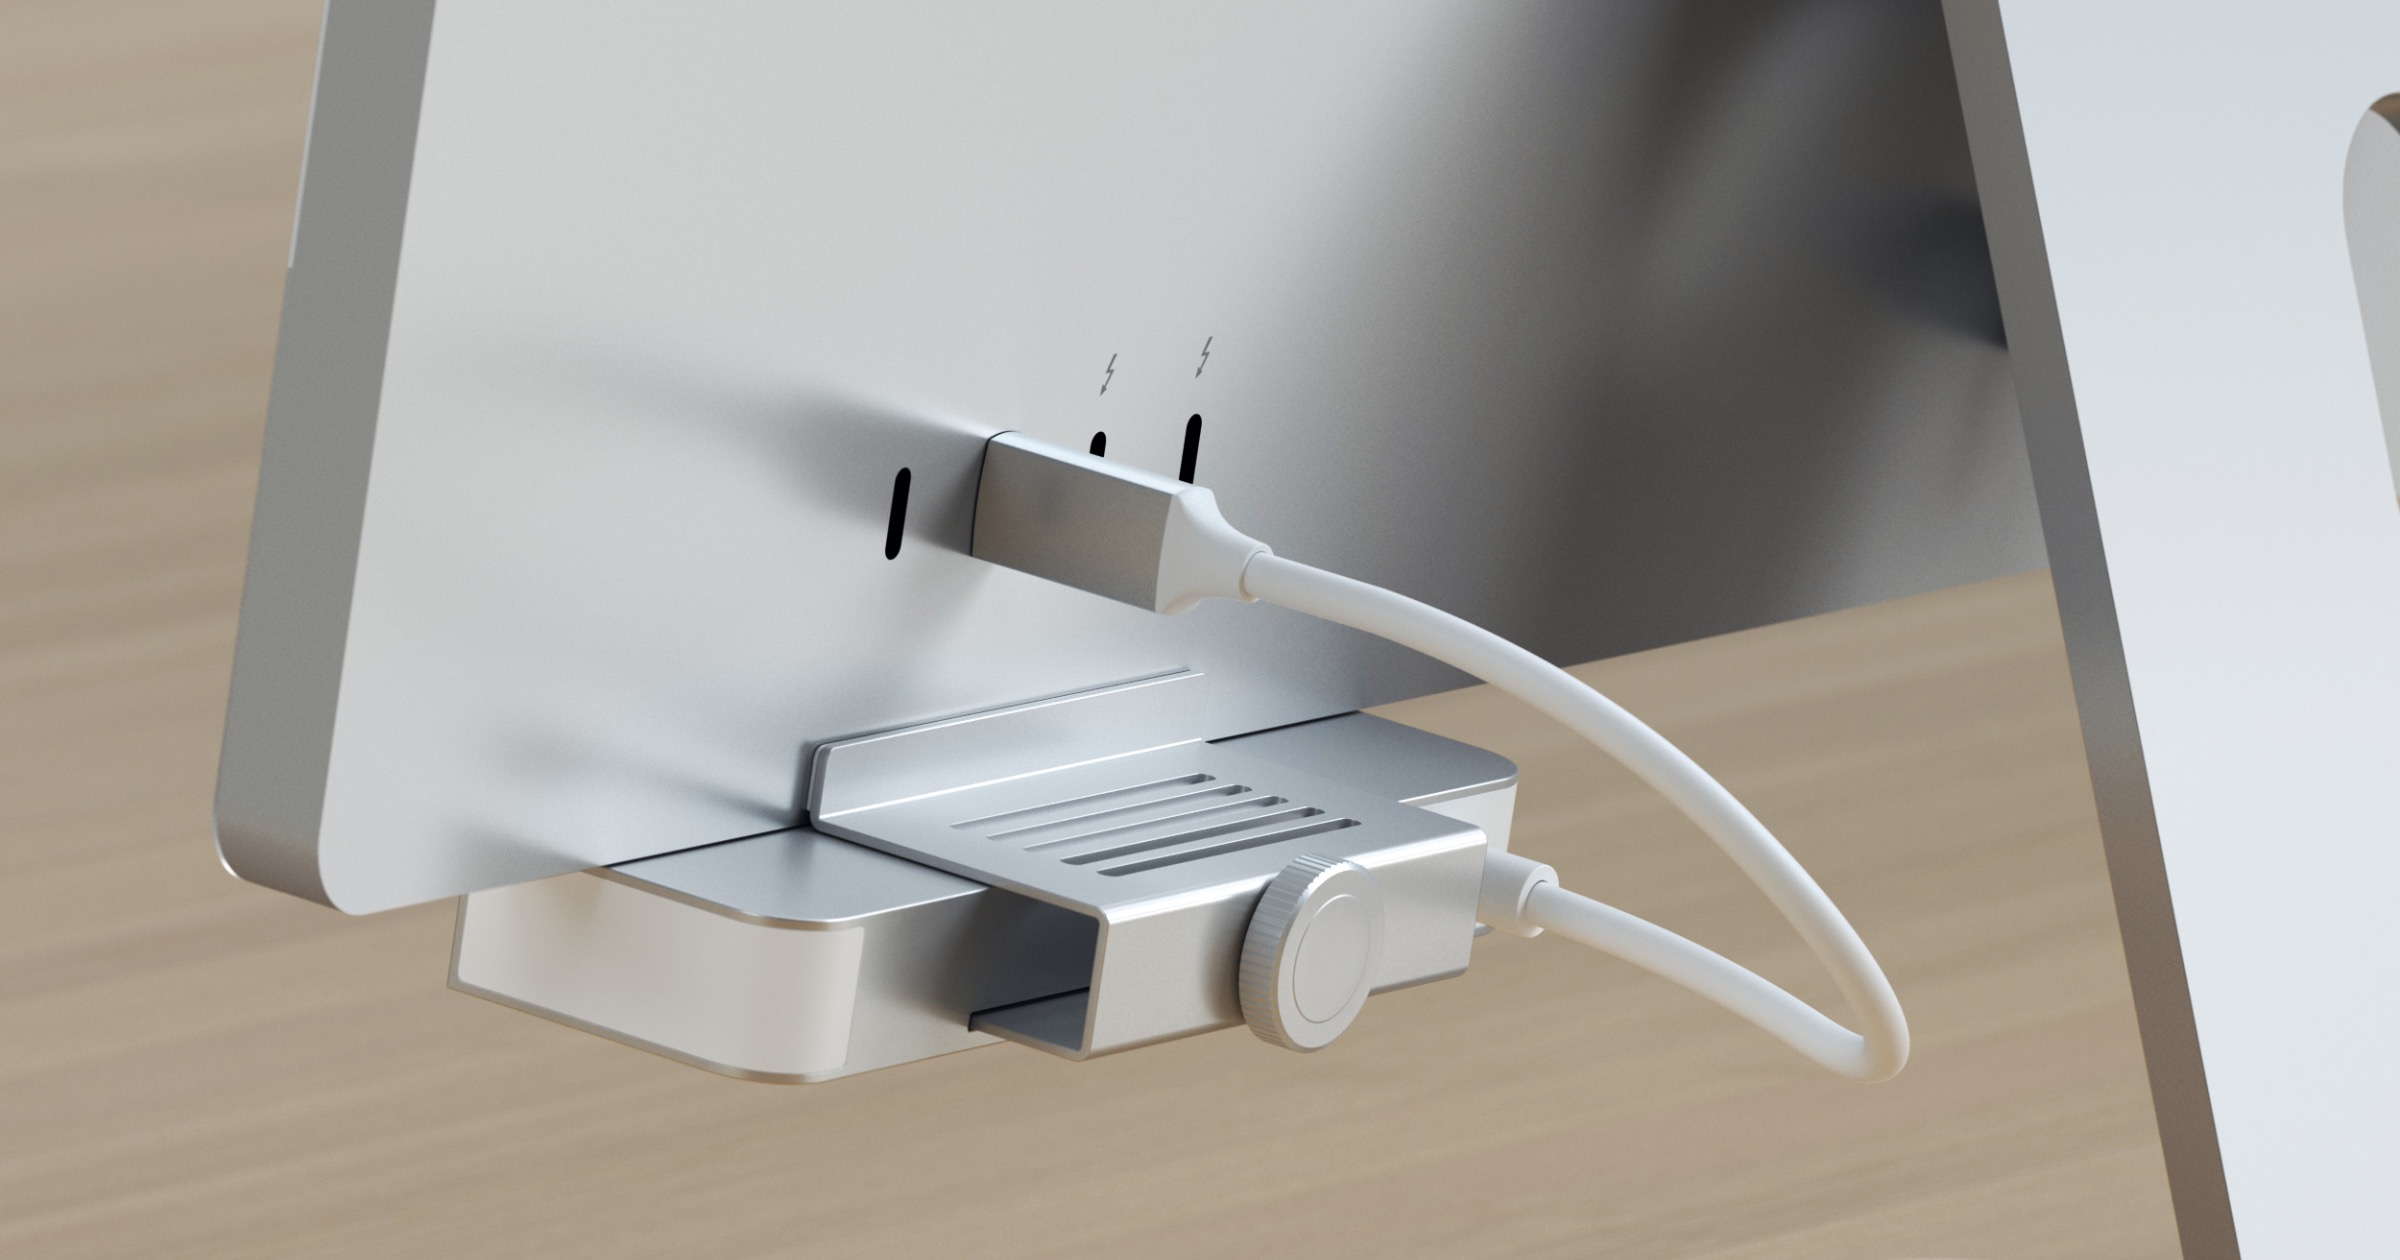 Satechi Releases 2021 iMac USB-C ‘Clamp Hub’